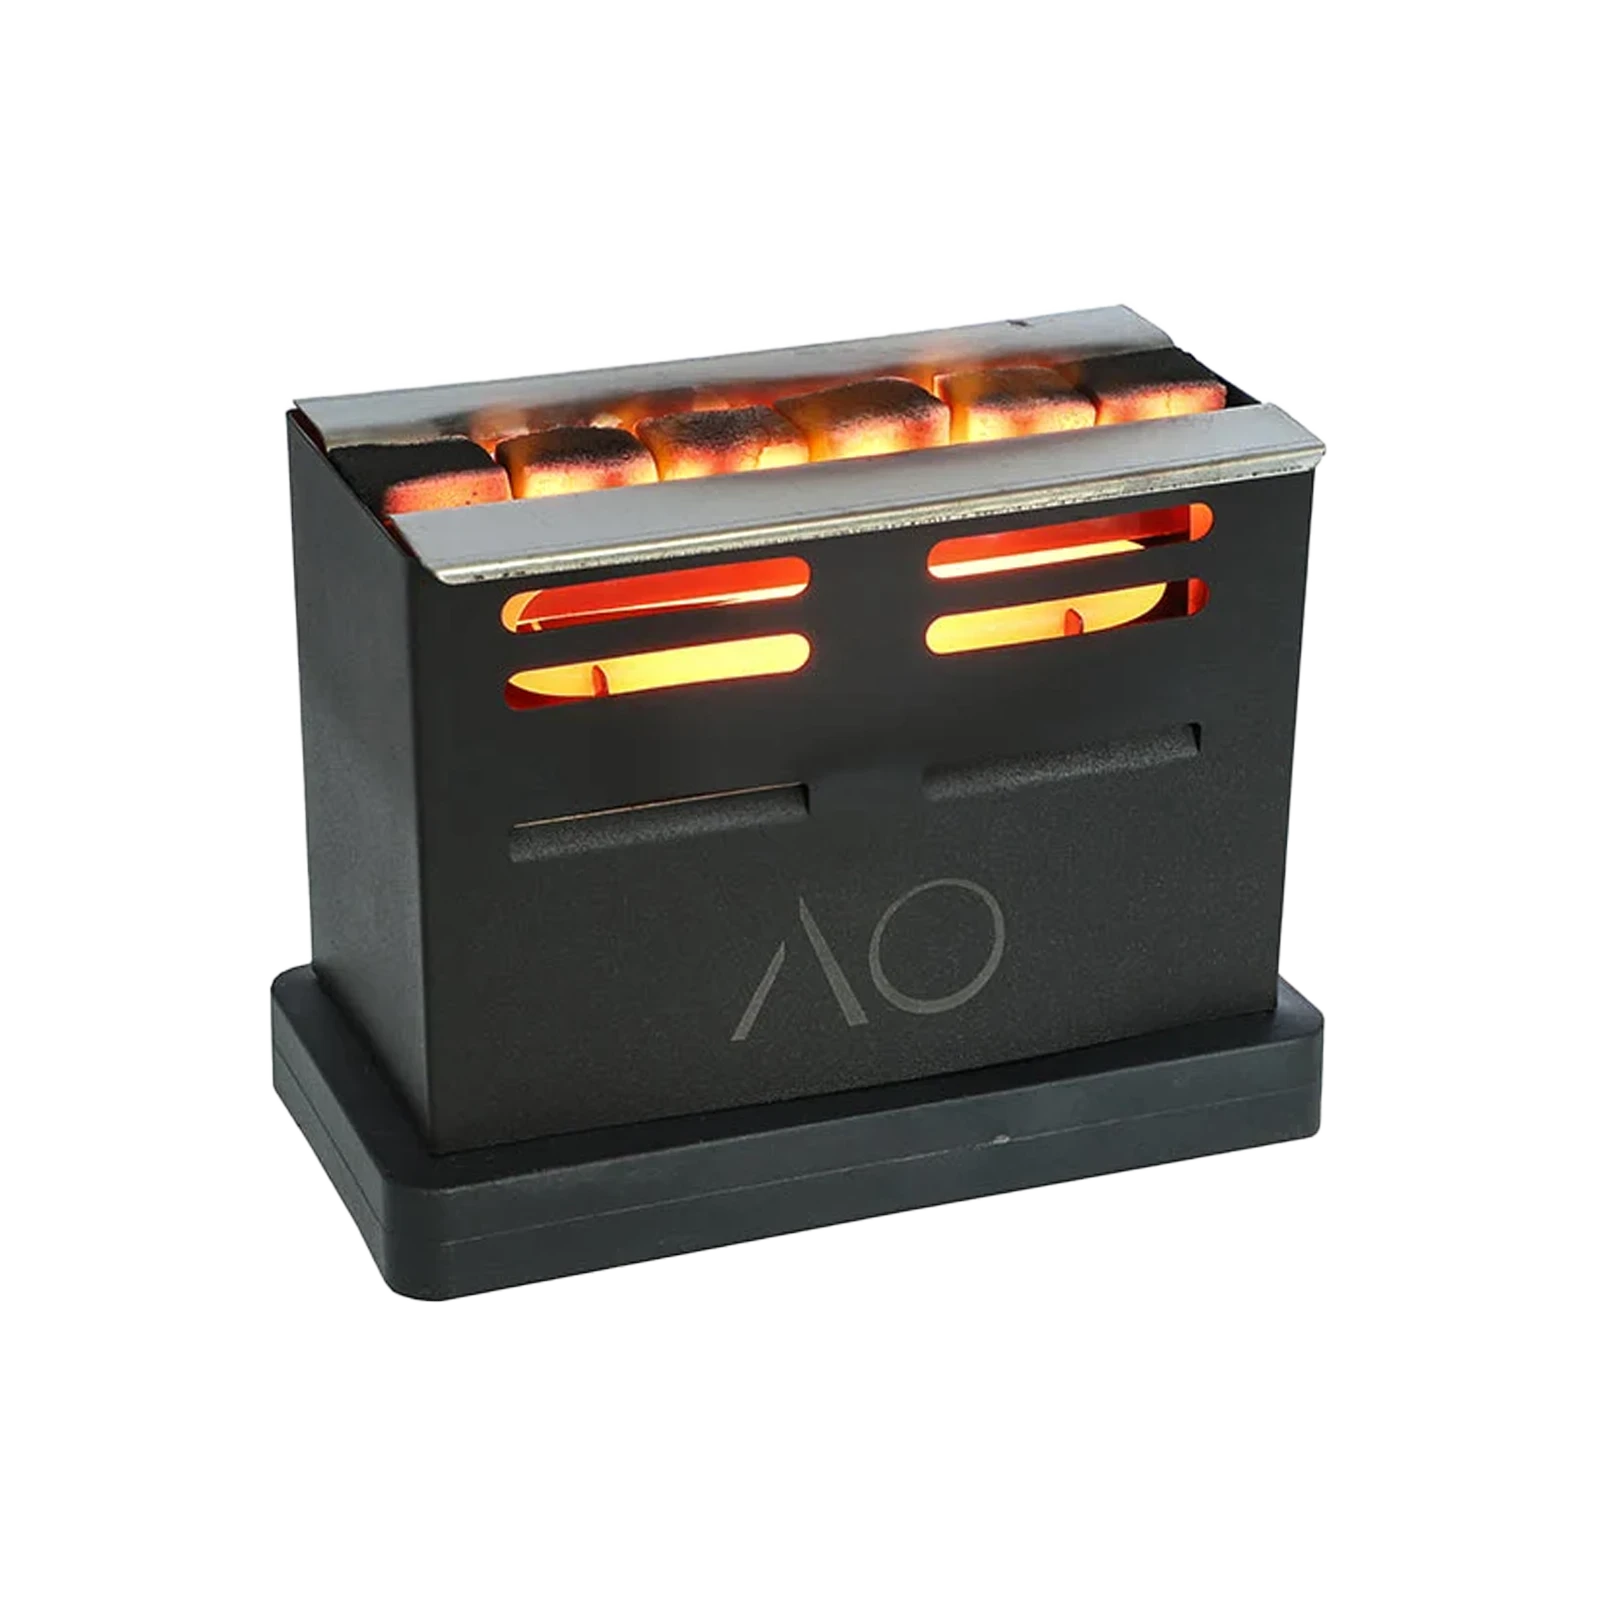 AO - Blazer V - Kohleanzünder - 800W | günstig online kaufen1